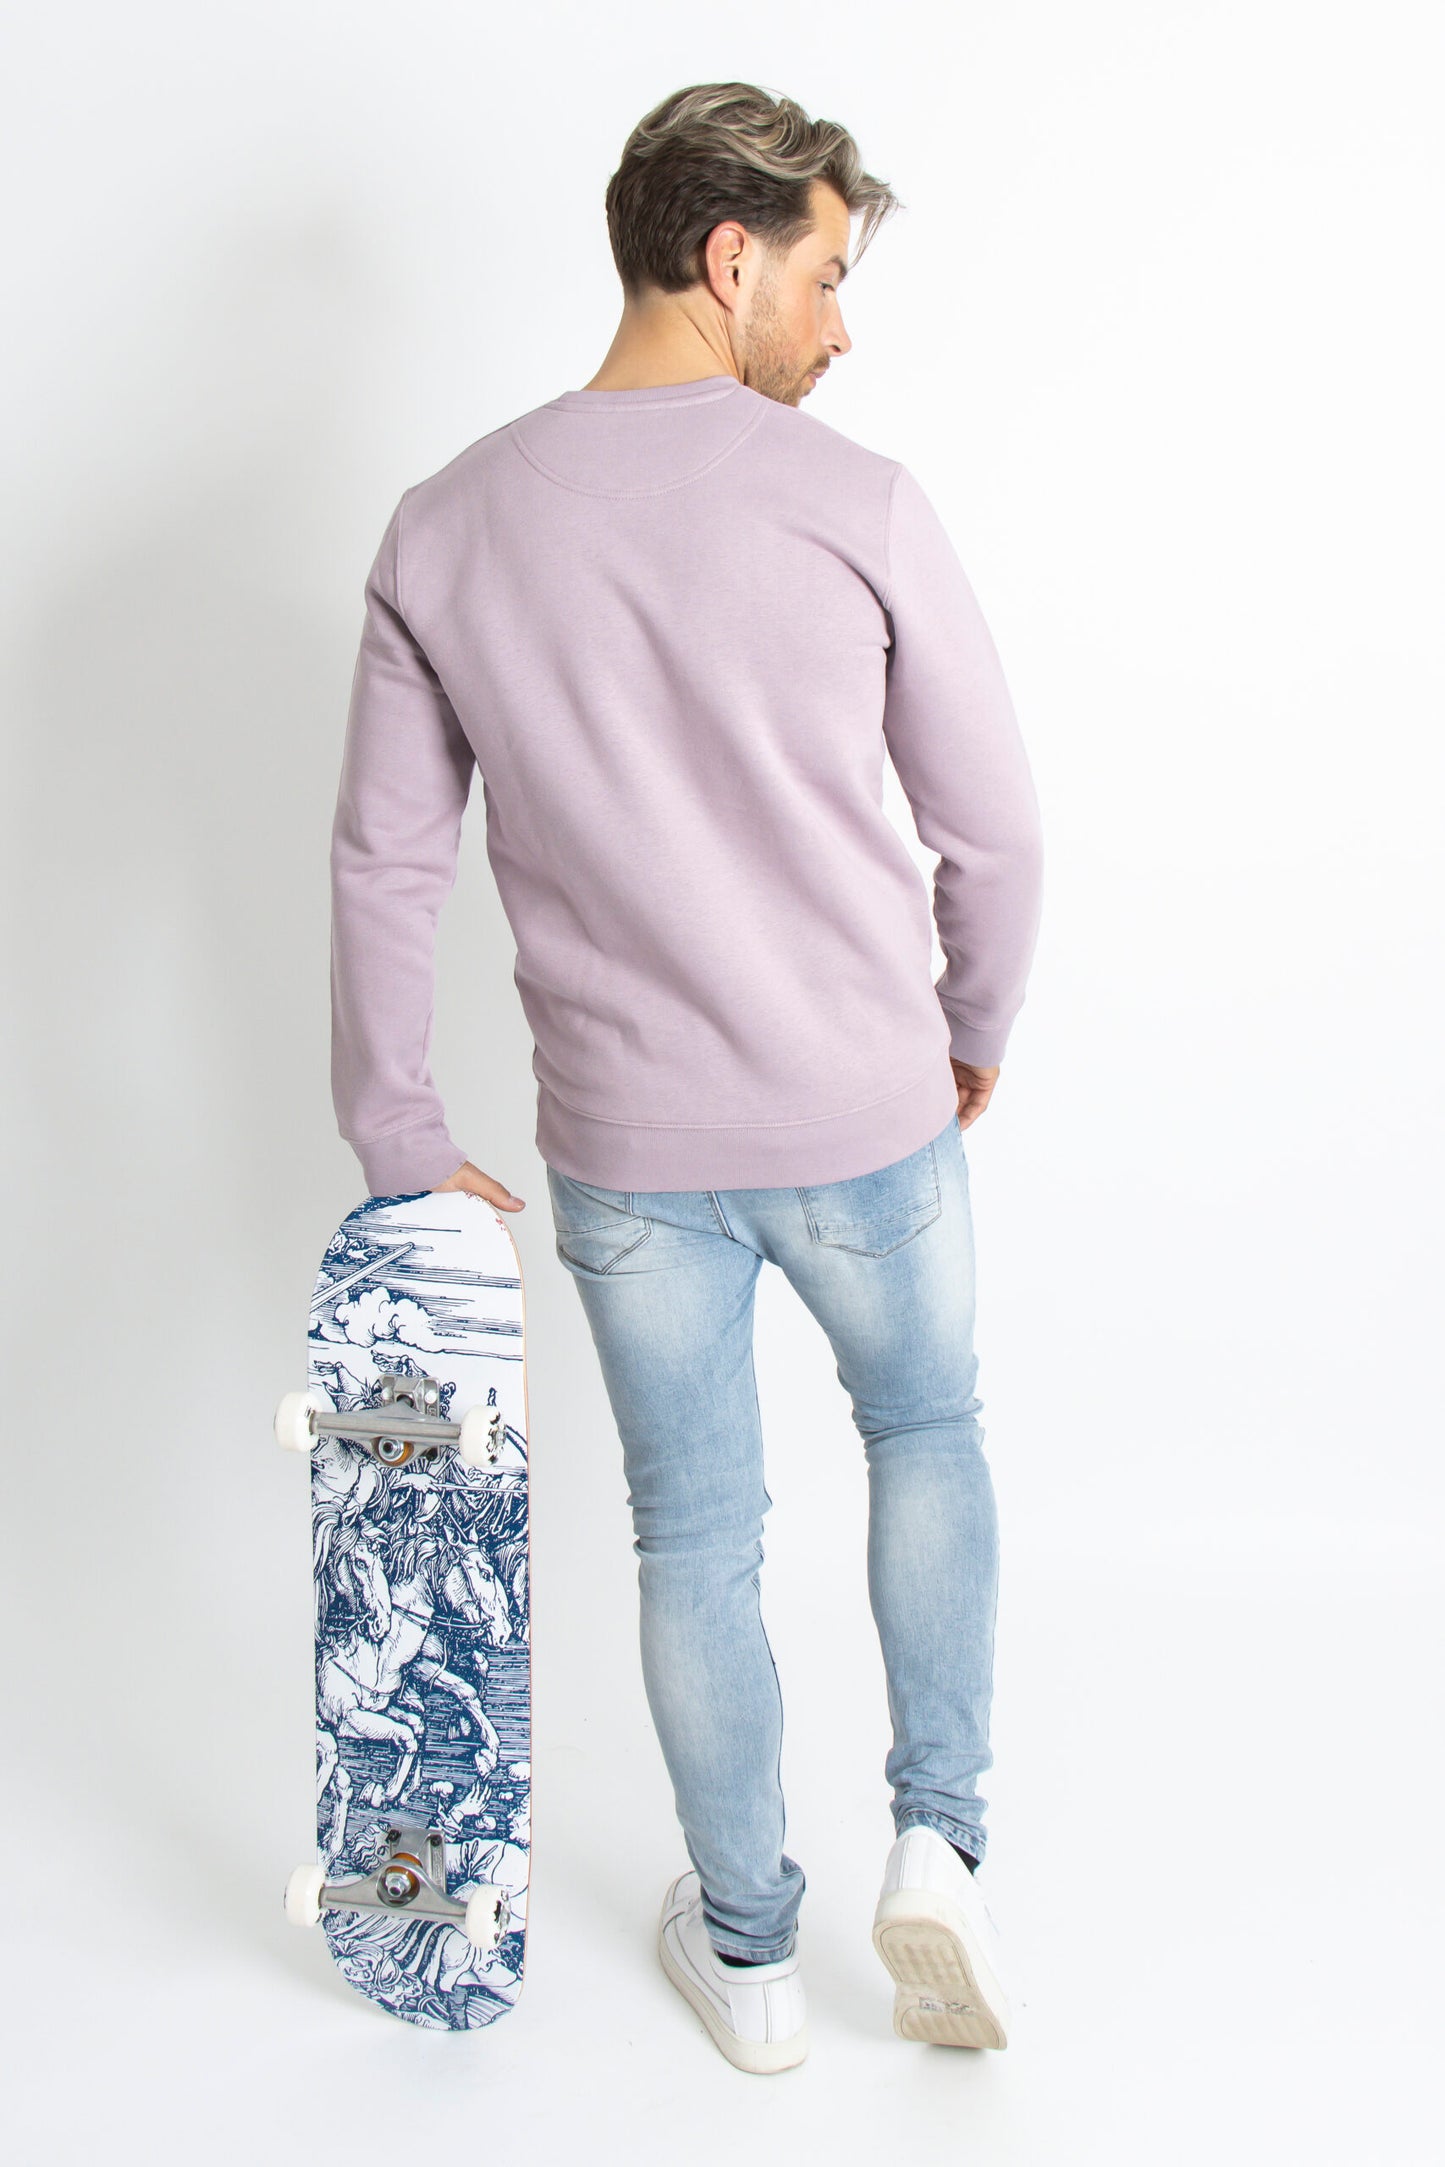 'Skate and meditate' mauve sweater